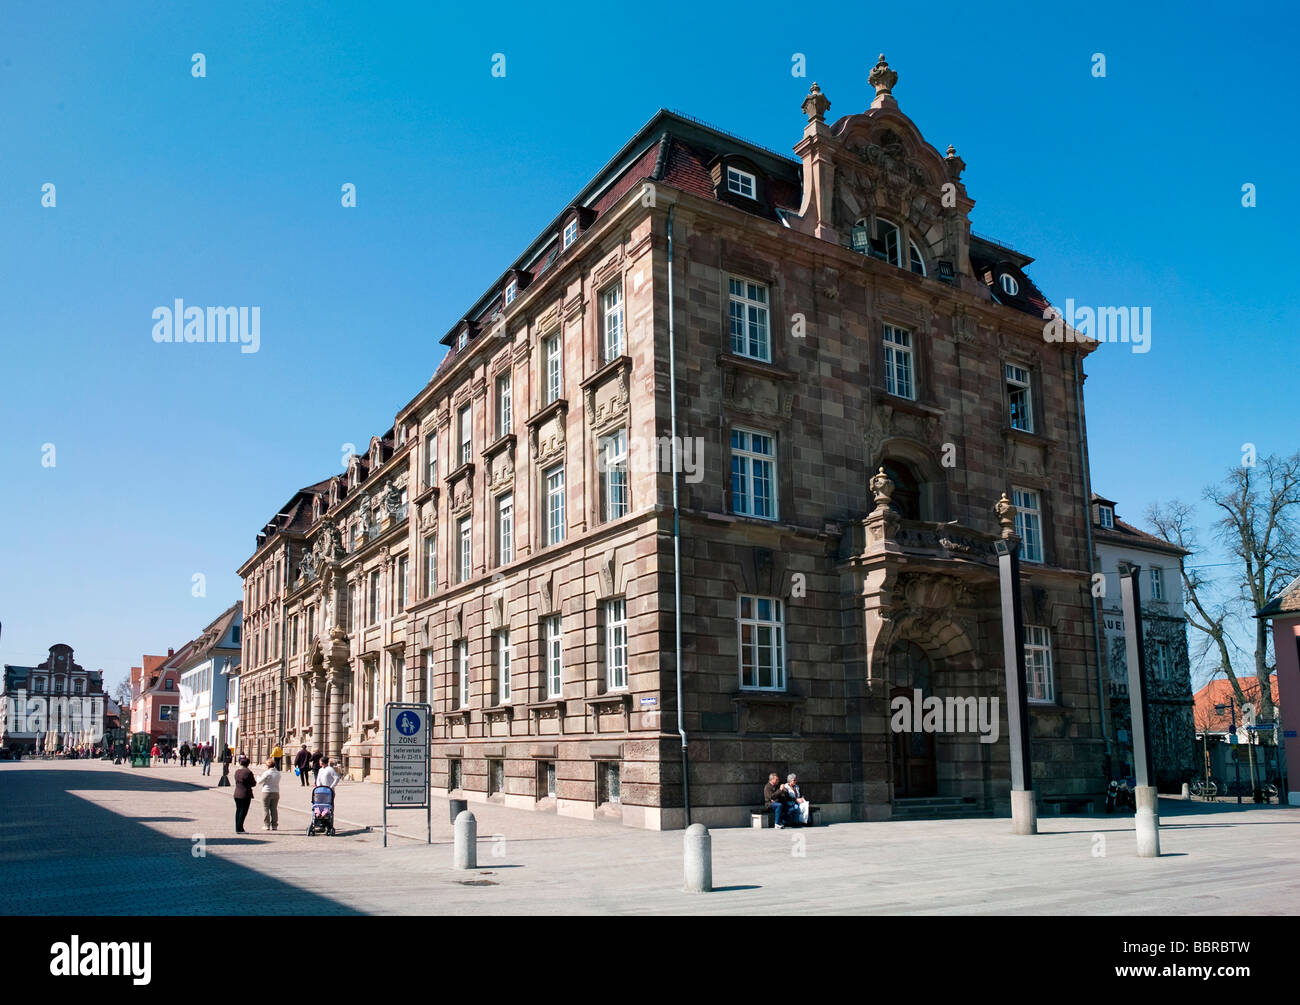 City house, city administration building with Mayor's office, Speyer, Rhineland-Palatinate, Germany, Europe Stock Photo